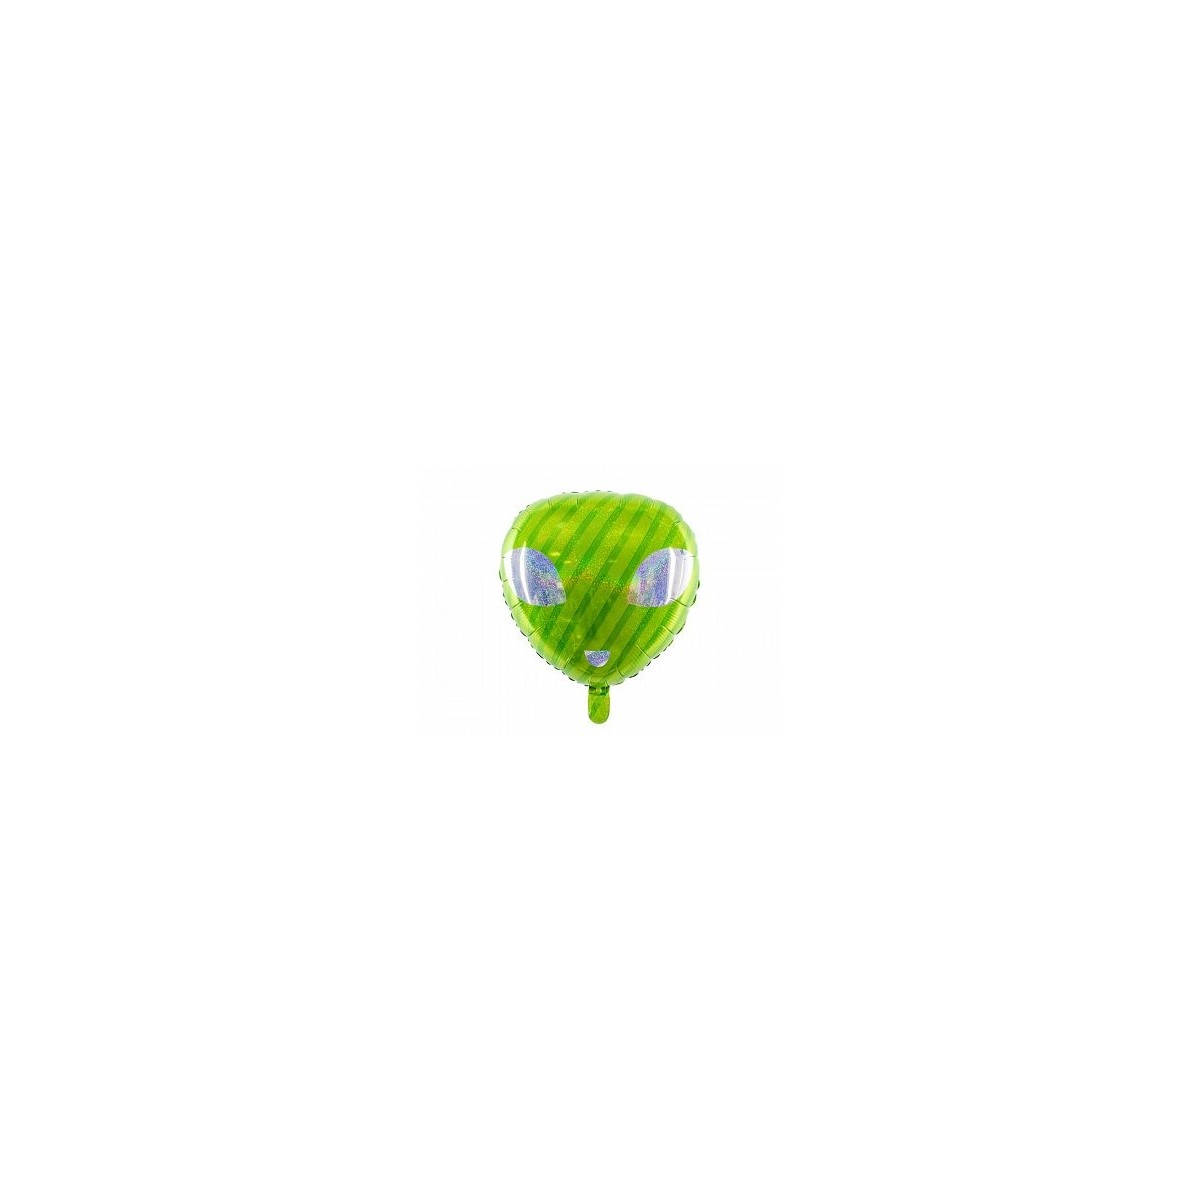 Ballon Ovni métallisé vert